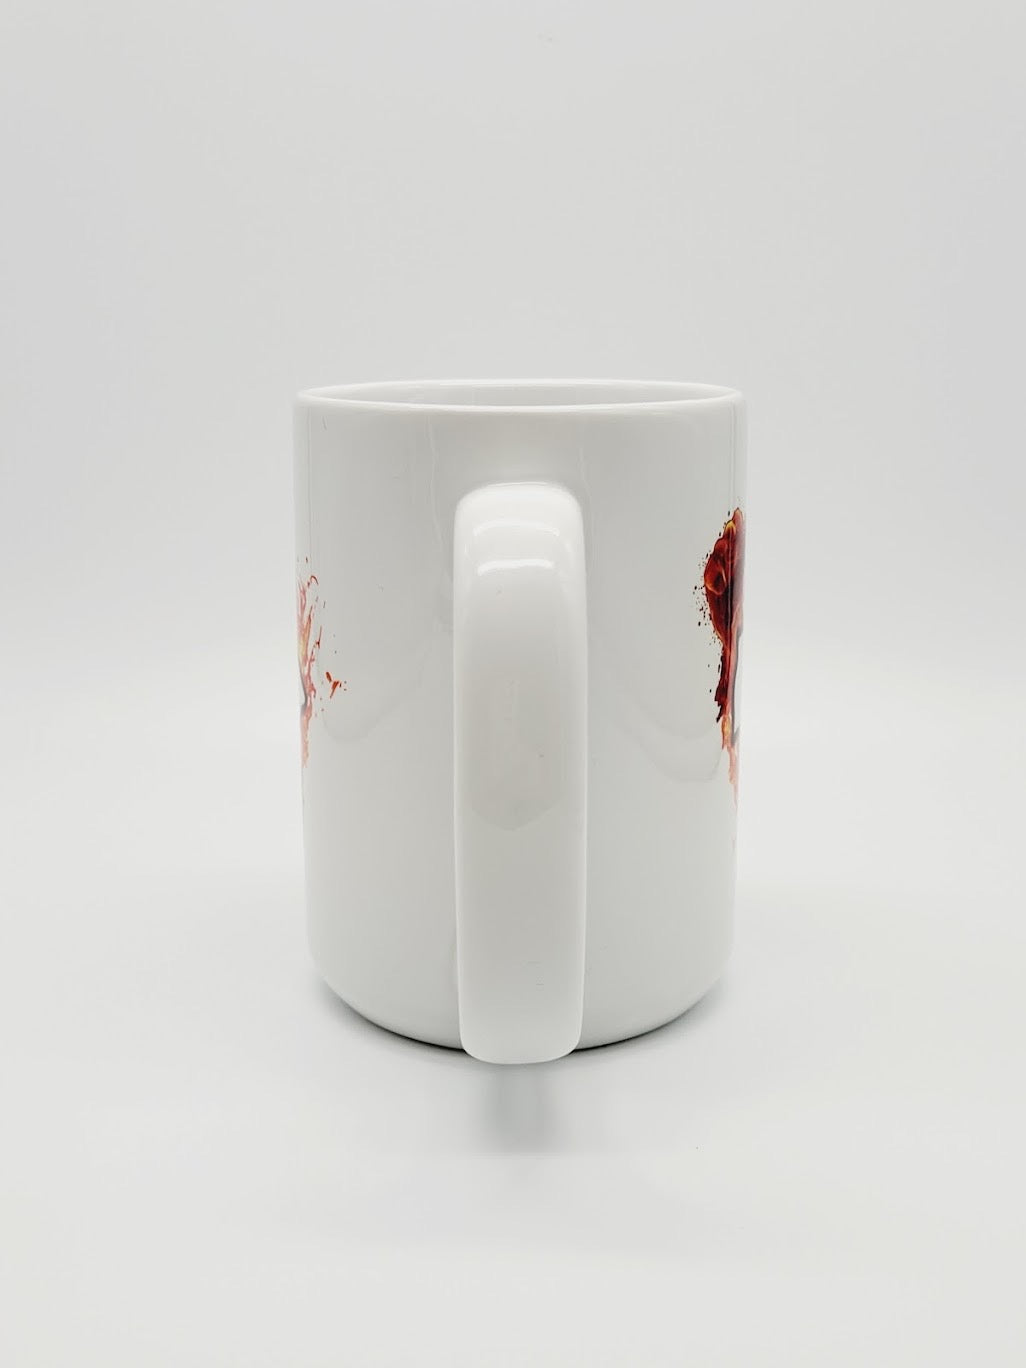 Pastele Ars no Kyojuu jpeg Custom Ceramic Mug Awesome Personalized Printed  11oz 15oz 20oz Ceramic Cup